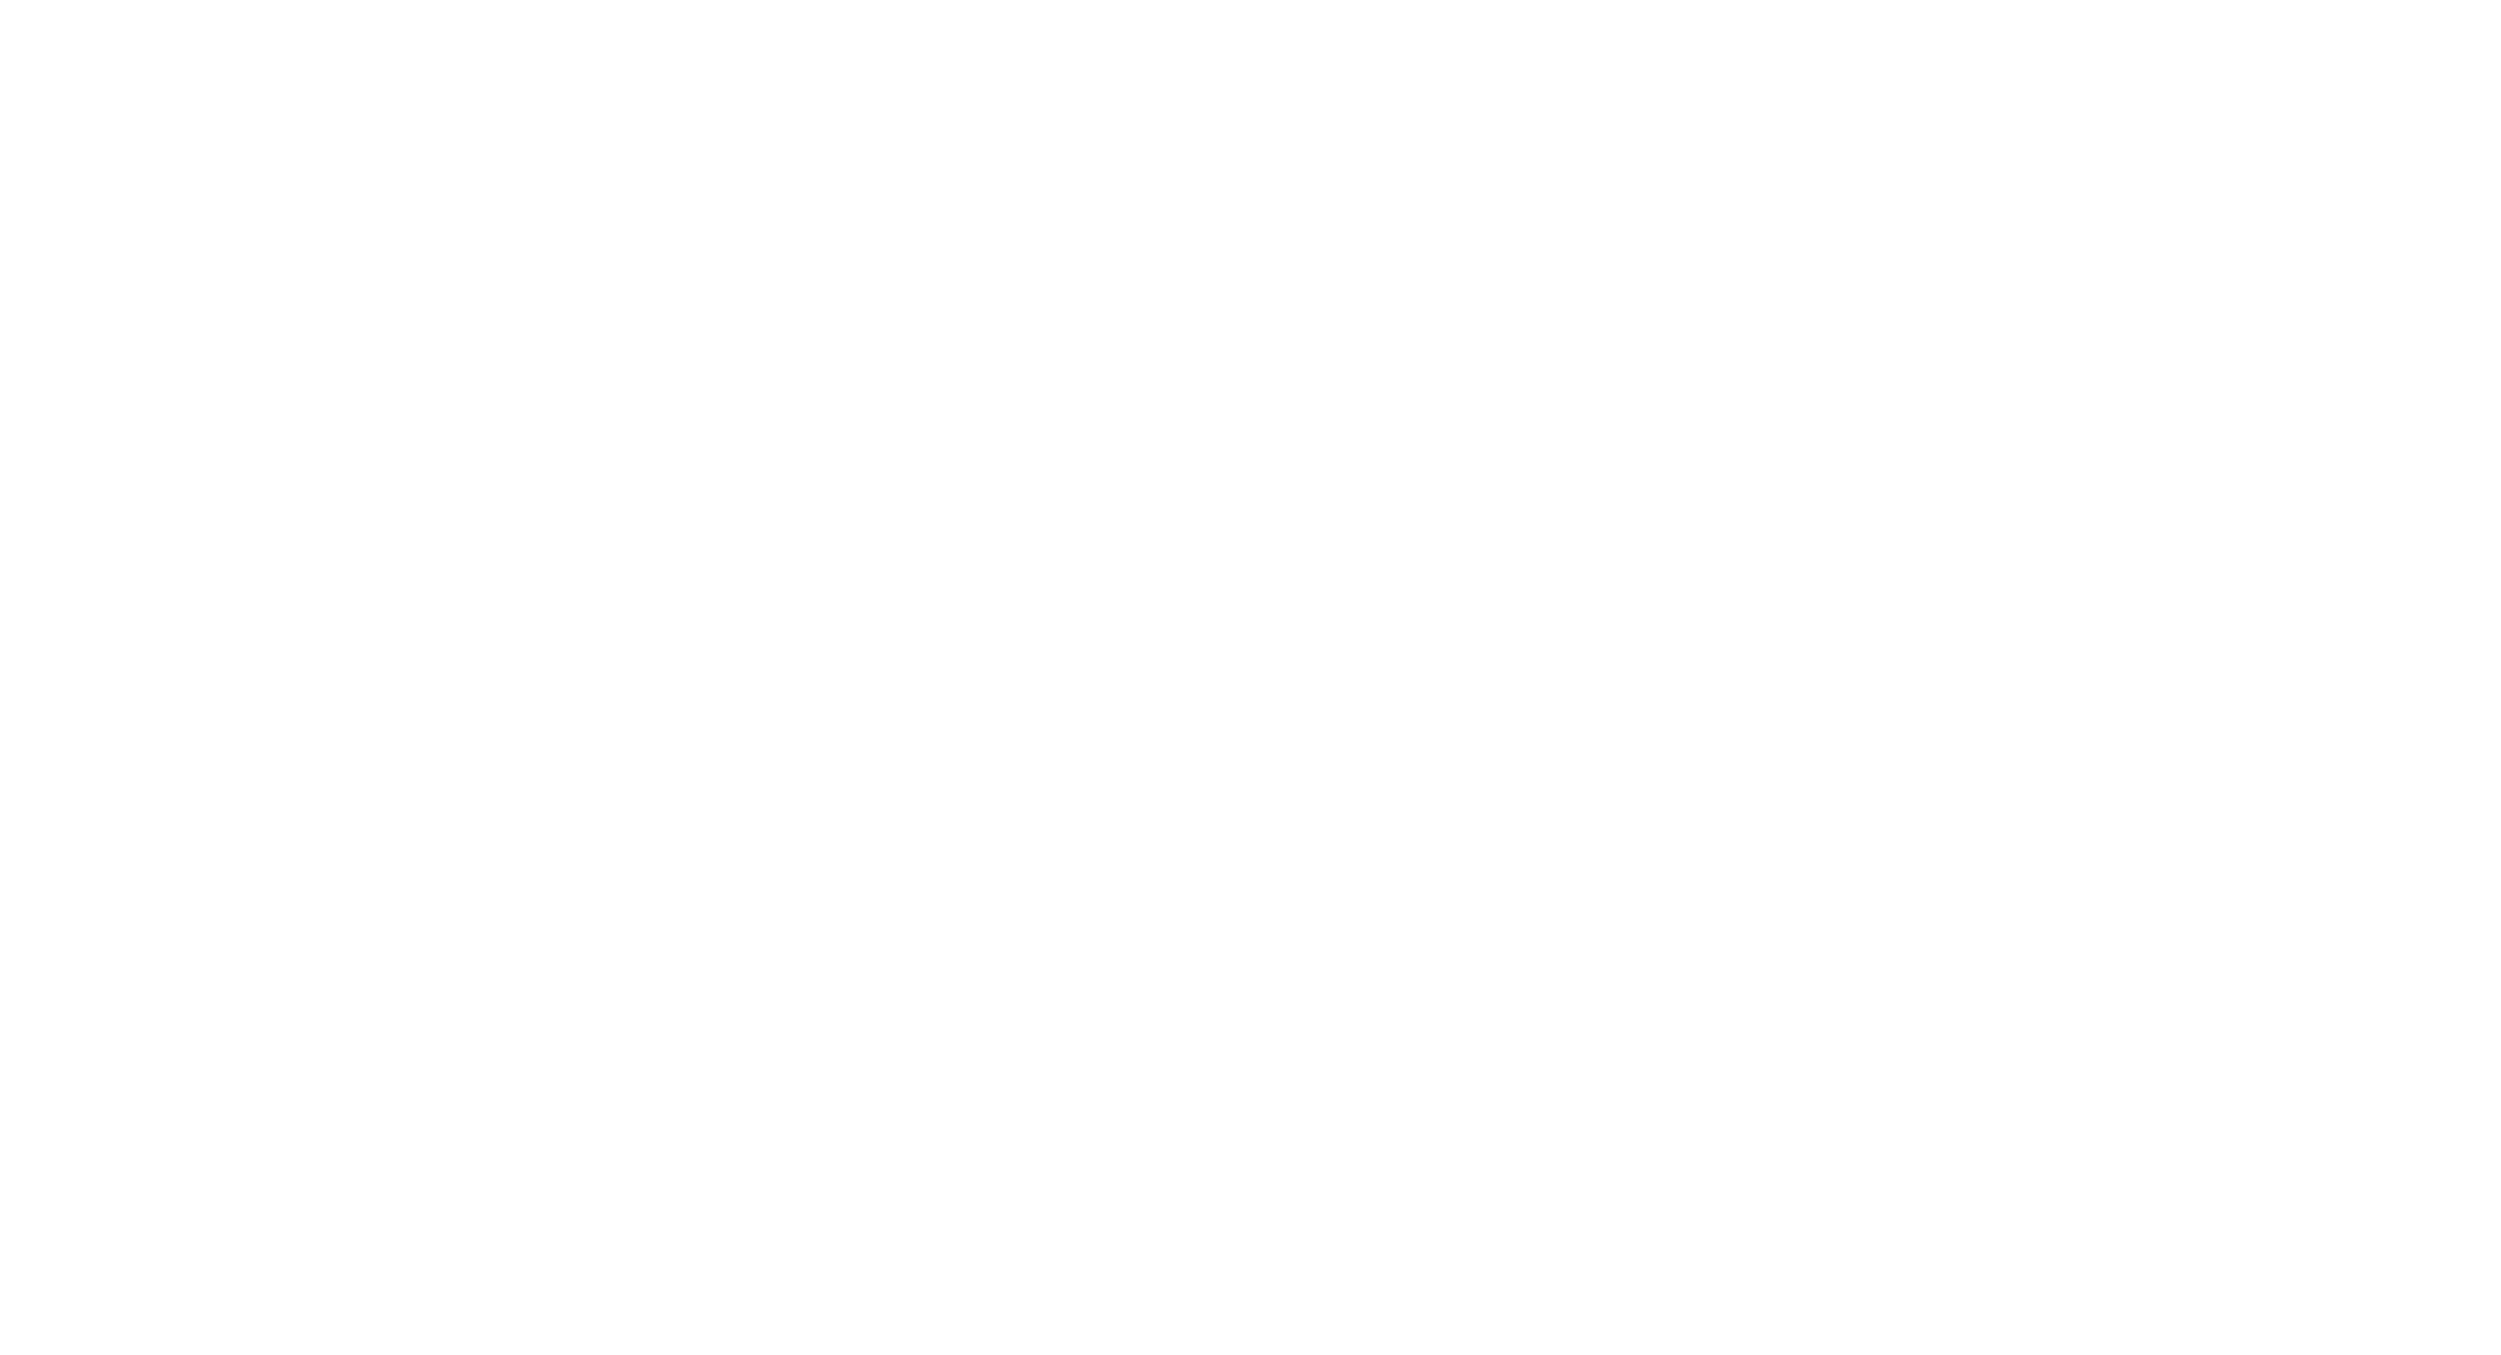 Infopoint Moncalieri